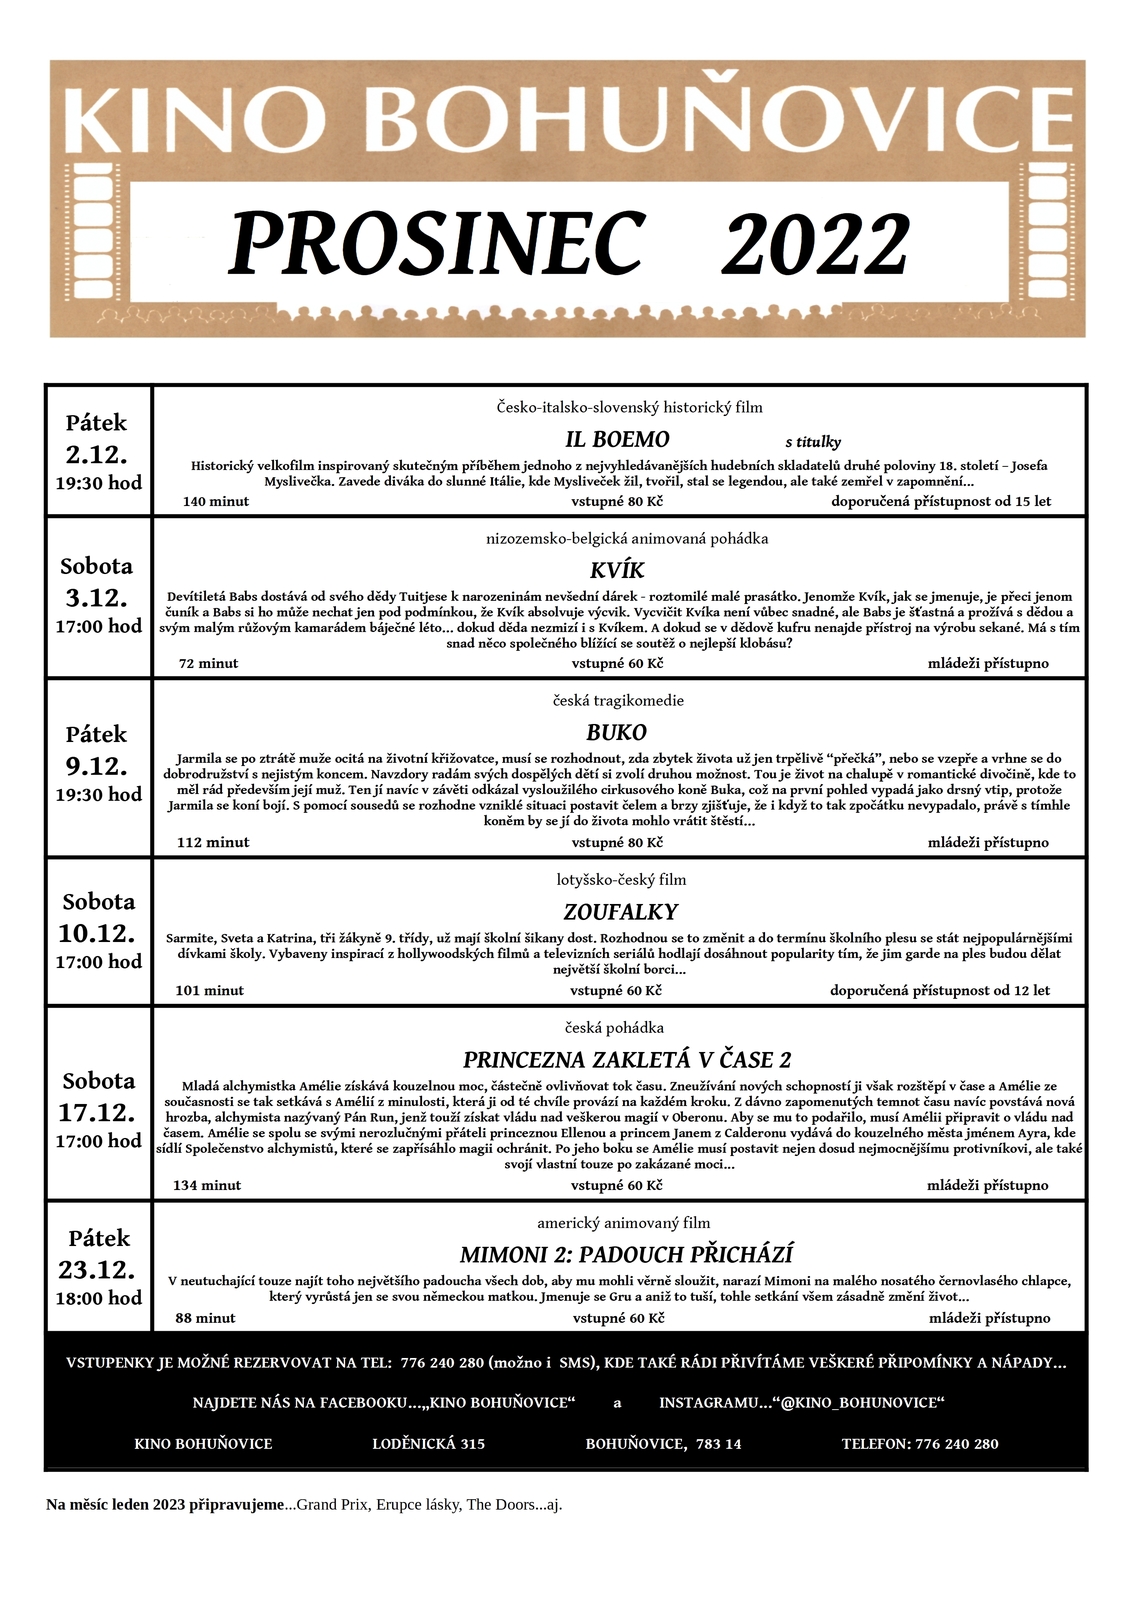 PROSINEC 2022 (002).jpg